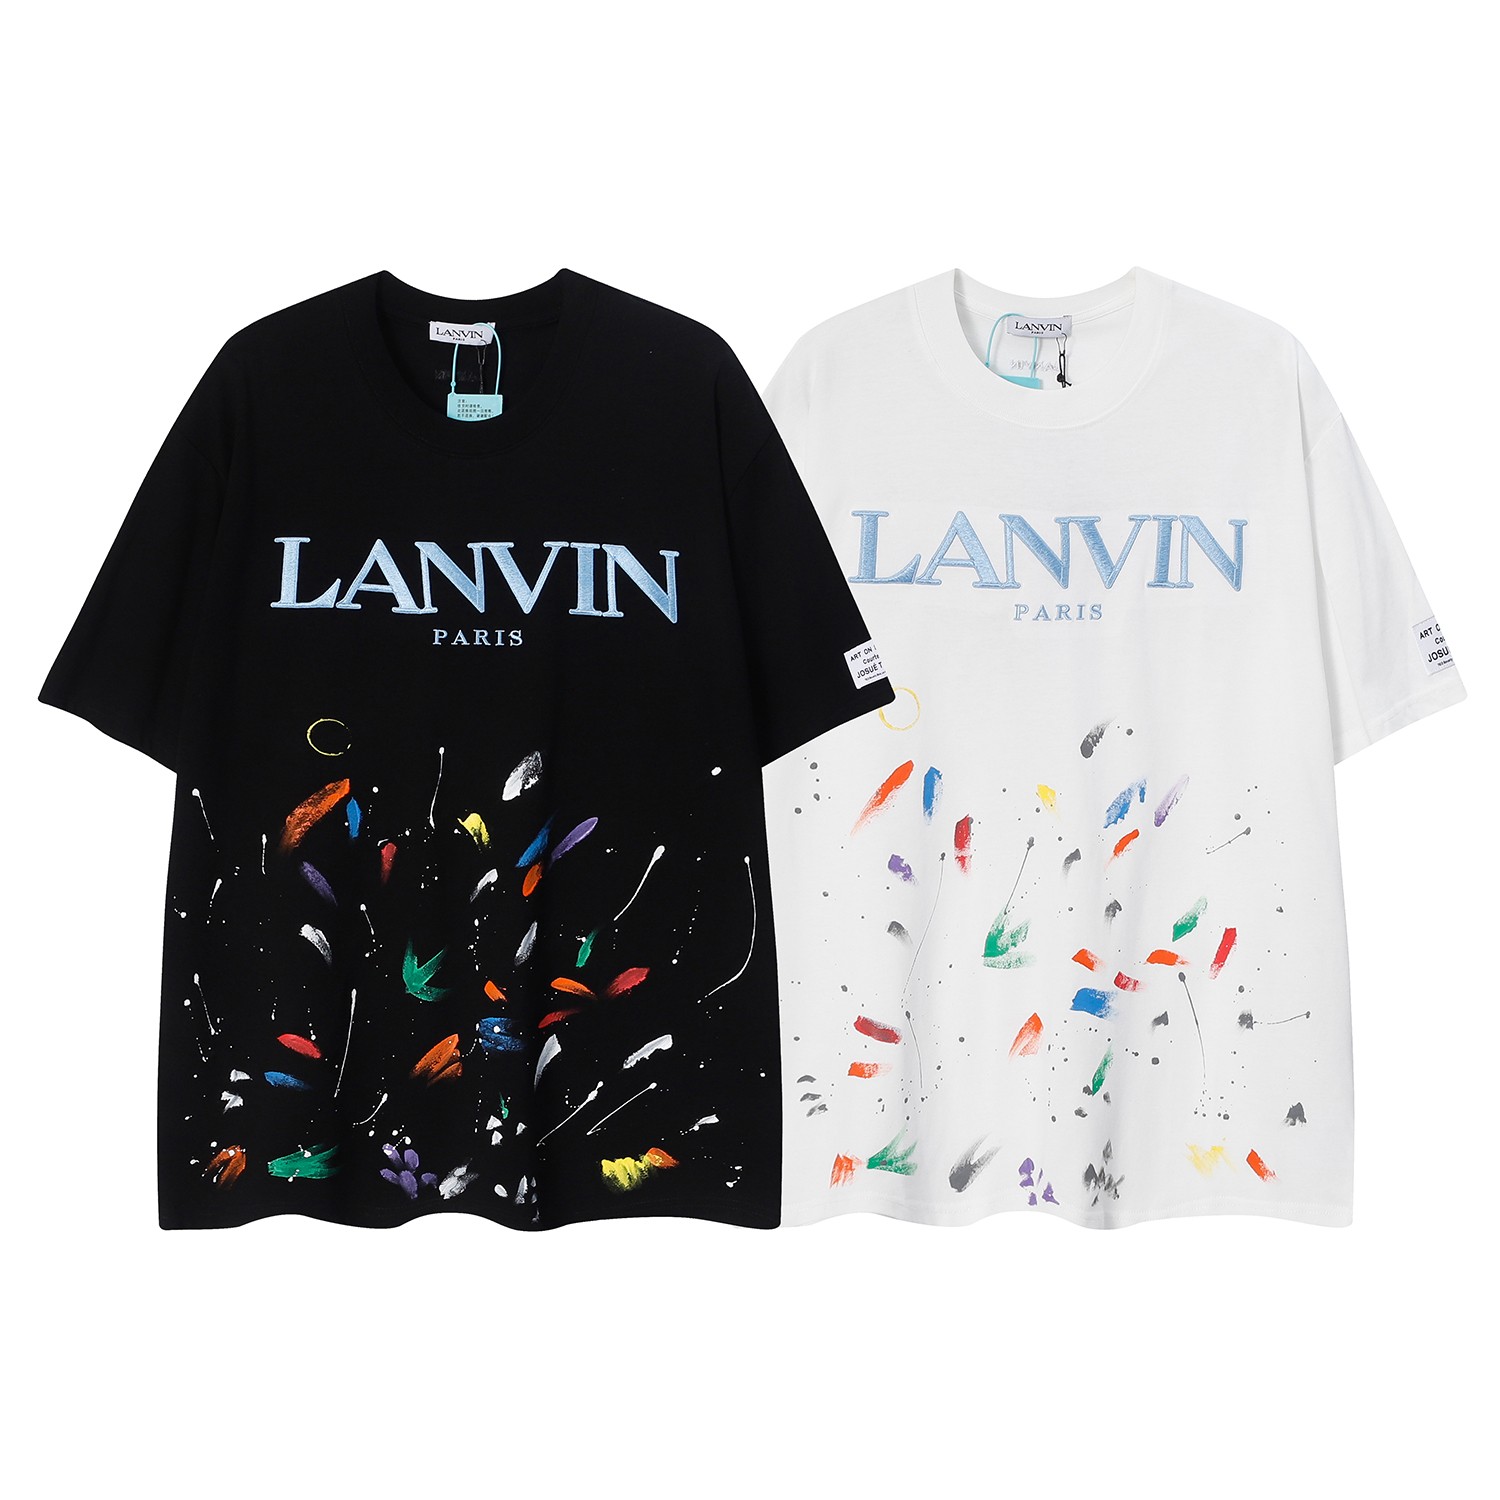 Lanvin Clothing T-Shirt Black White Unisex Short Sleeve